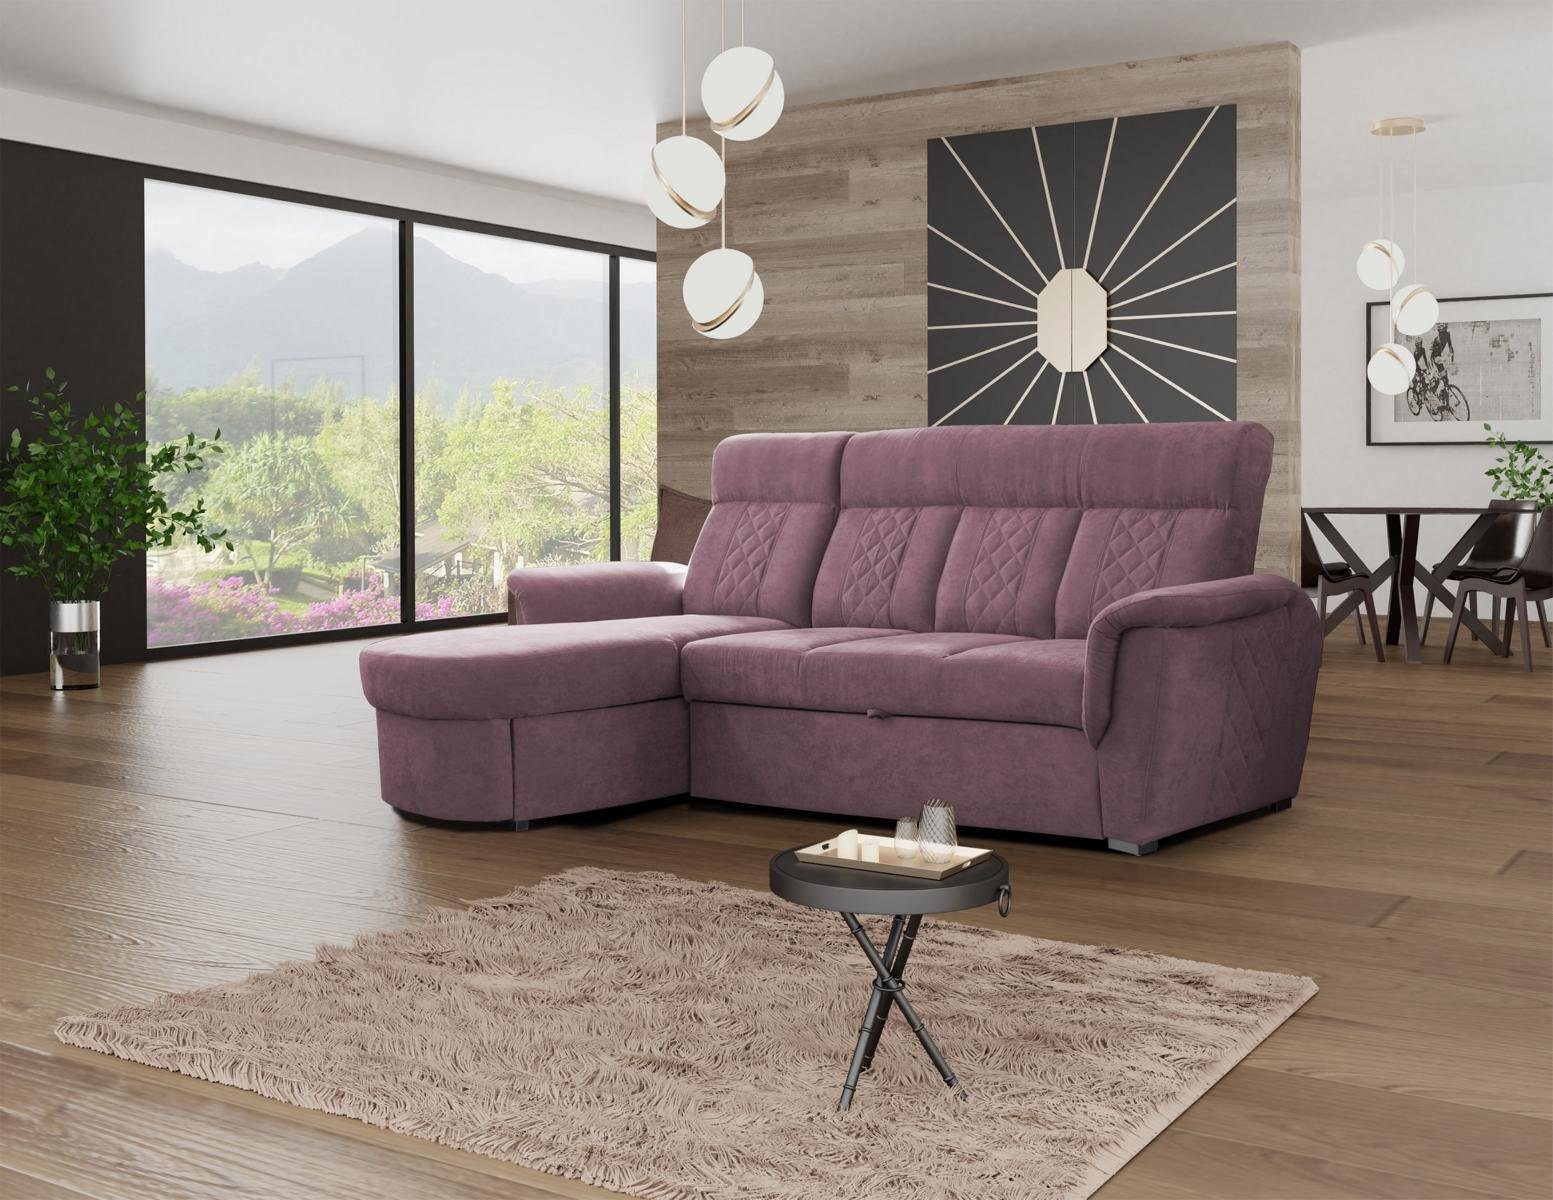 JVmoebel Ecksofa Ecksofa Sofas hochwertige Lila exklusive Bettfunktion Sofas moderne L-Form, Mit Design